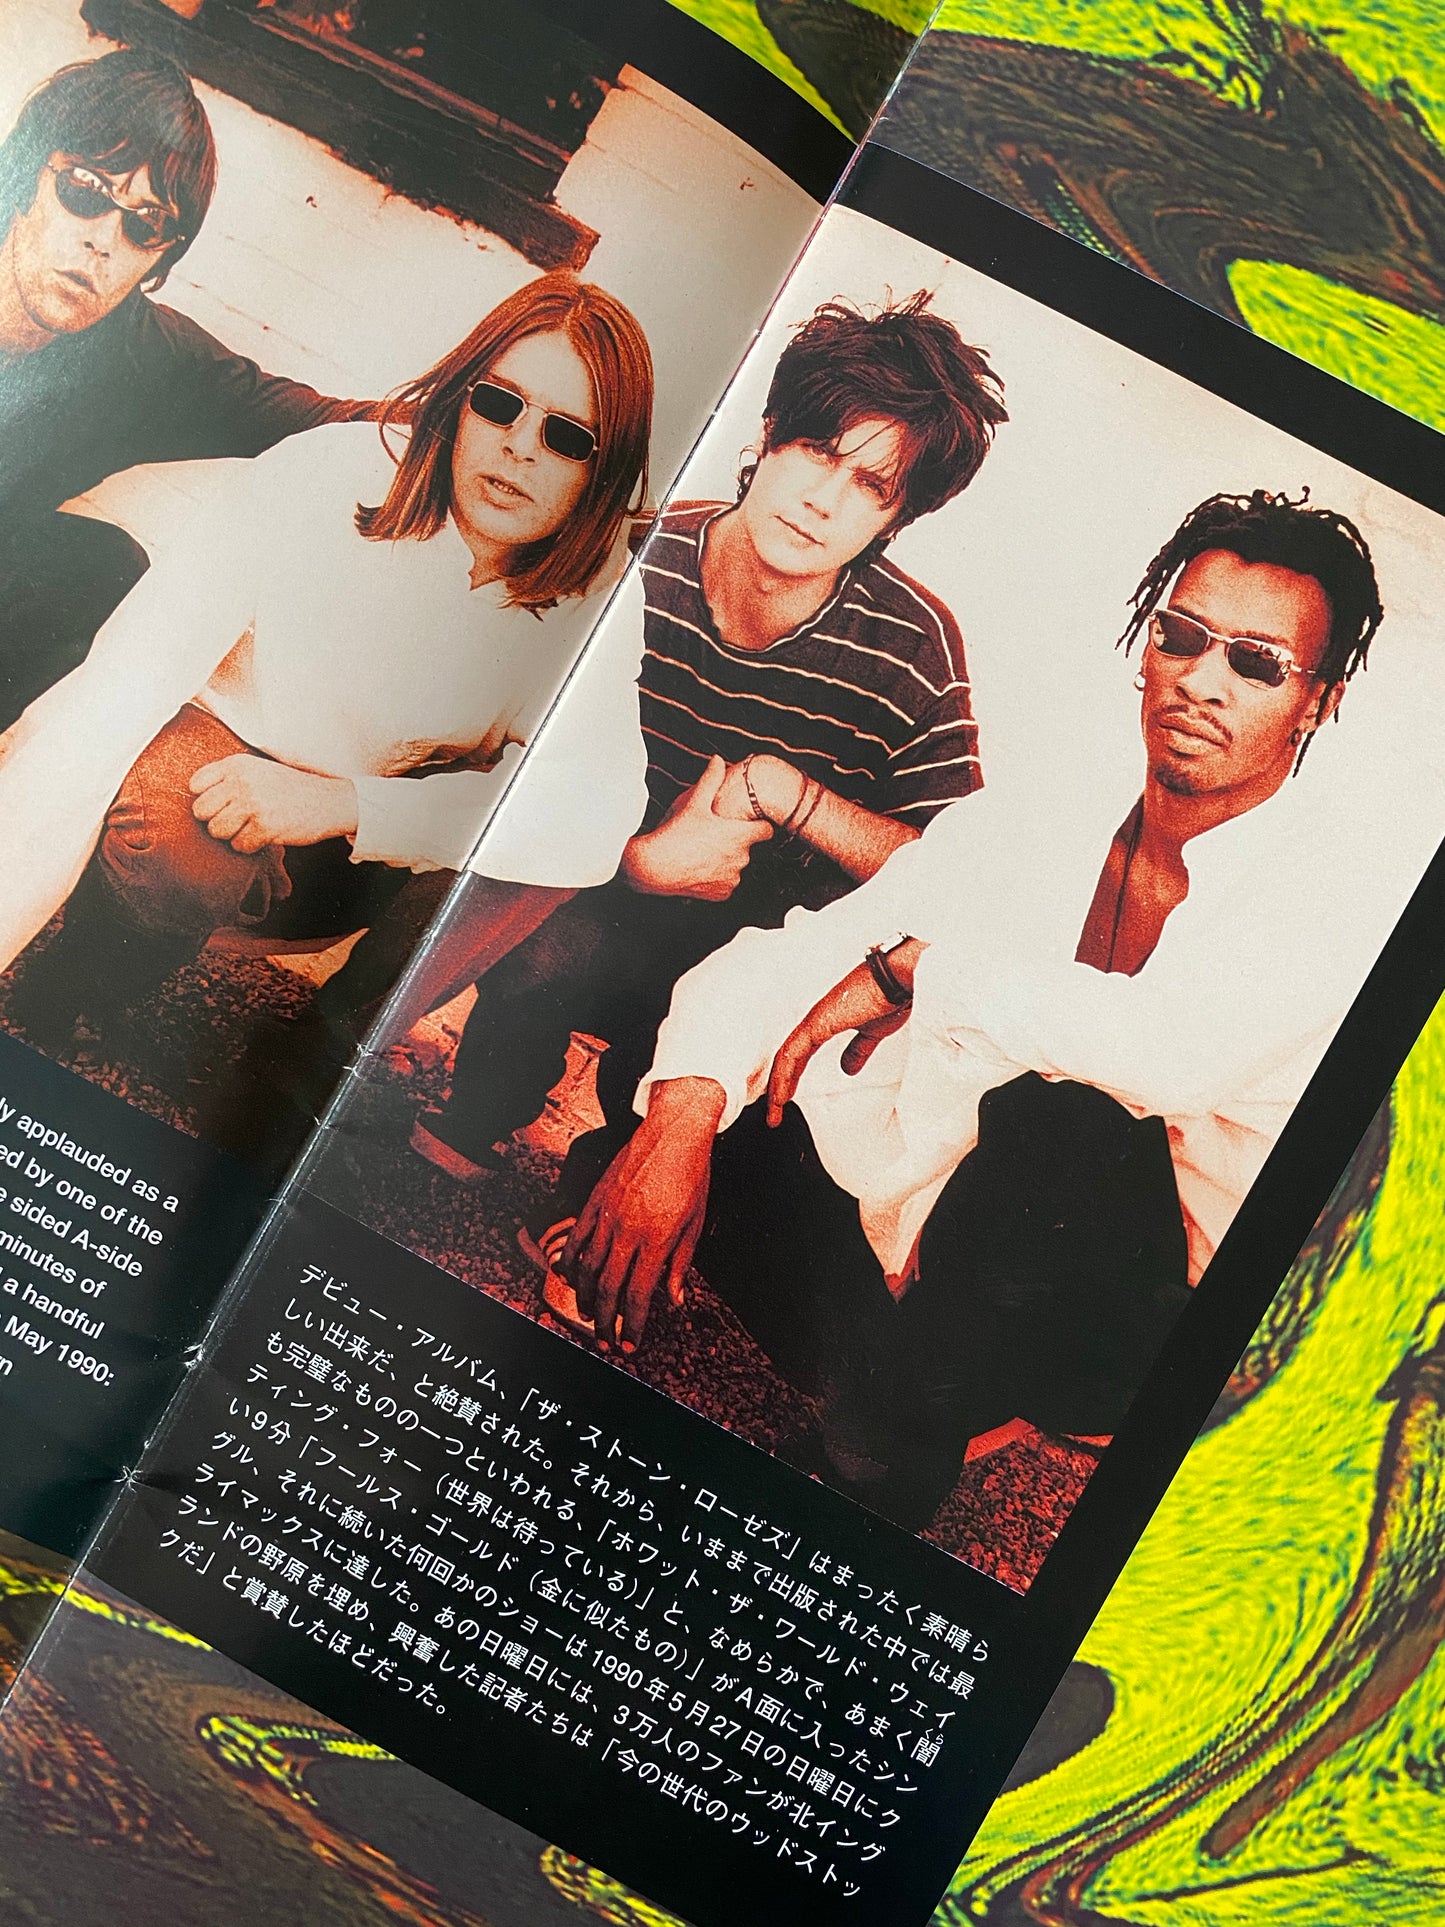 The Stone Roses 1995 Japanese Tour Programme